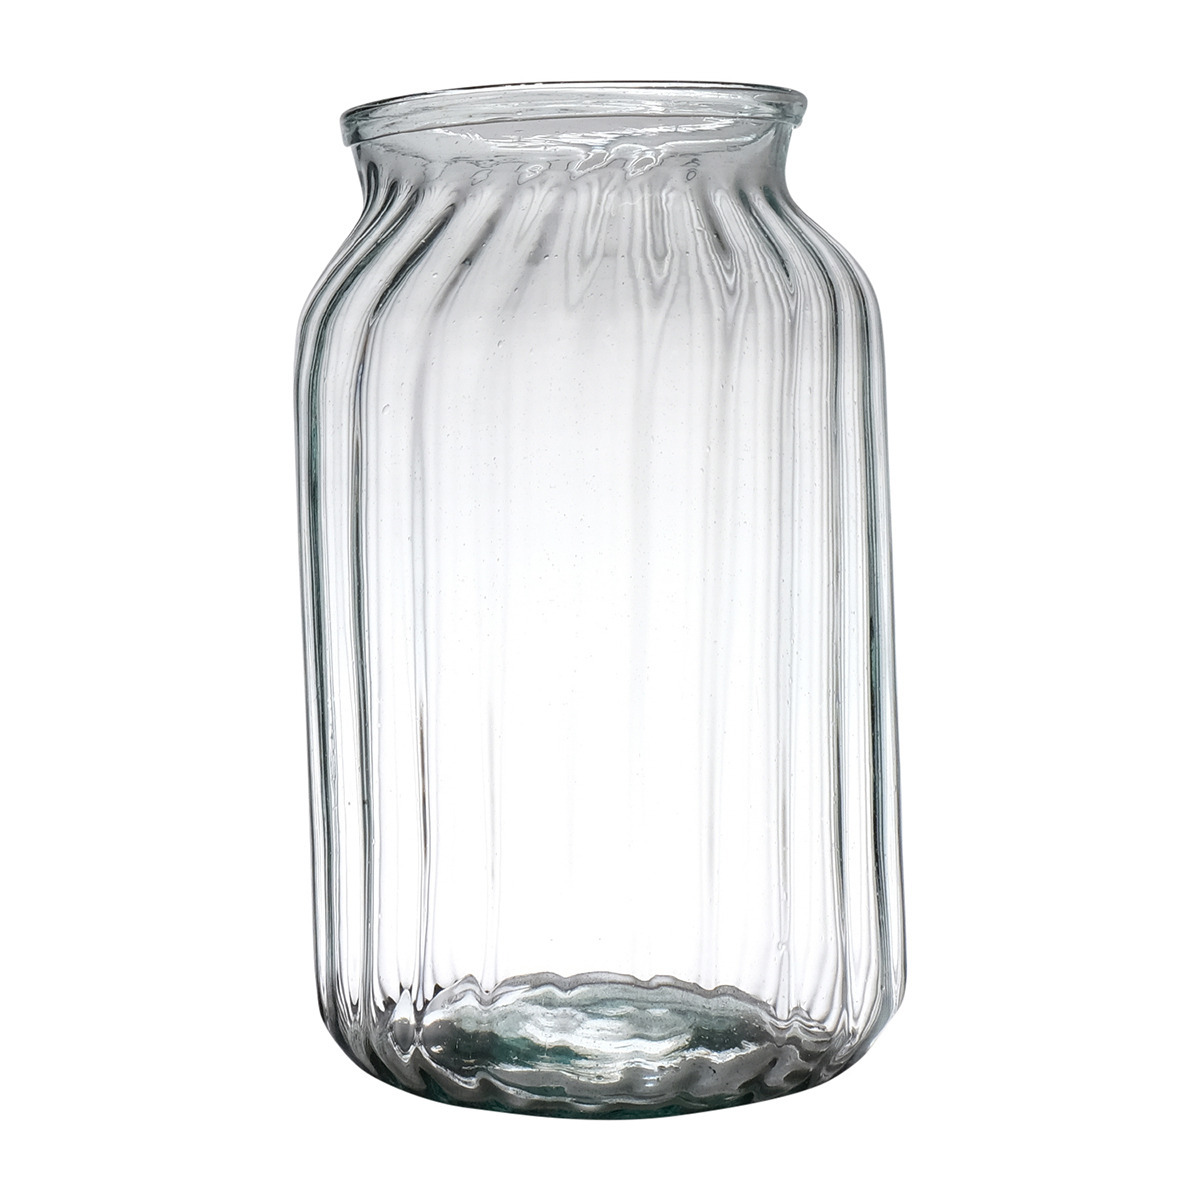 Hakbijl Glass Bloemenvaas Organic transparant eco glas D18 x H30 cm Melkbus vaas